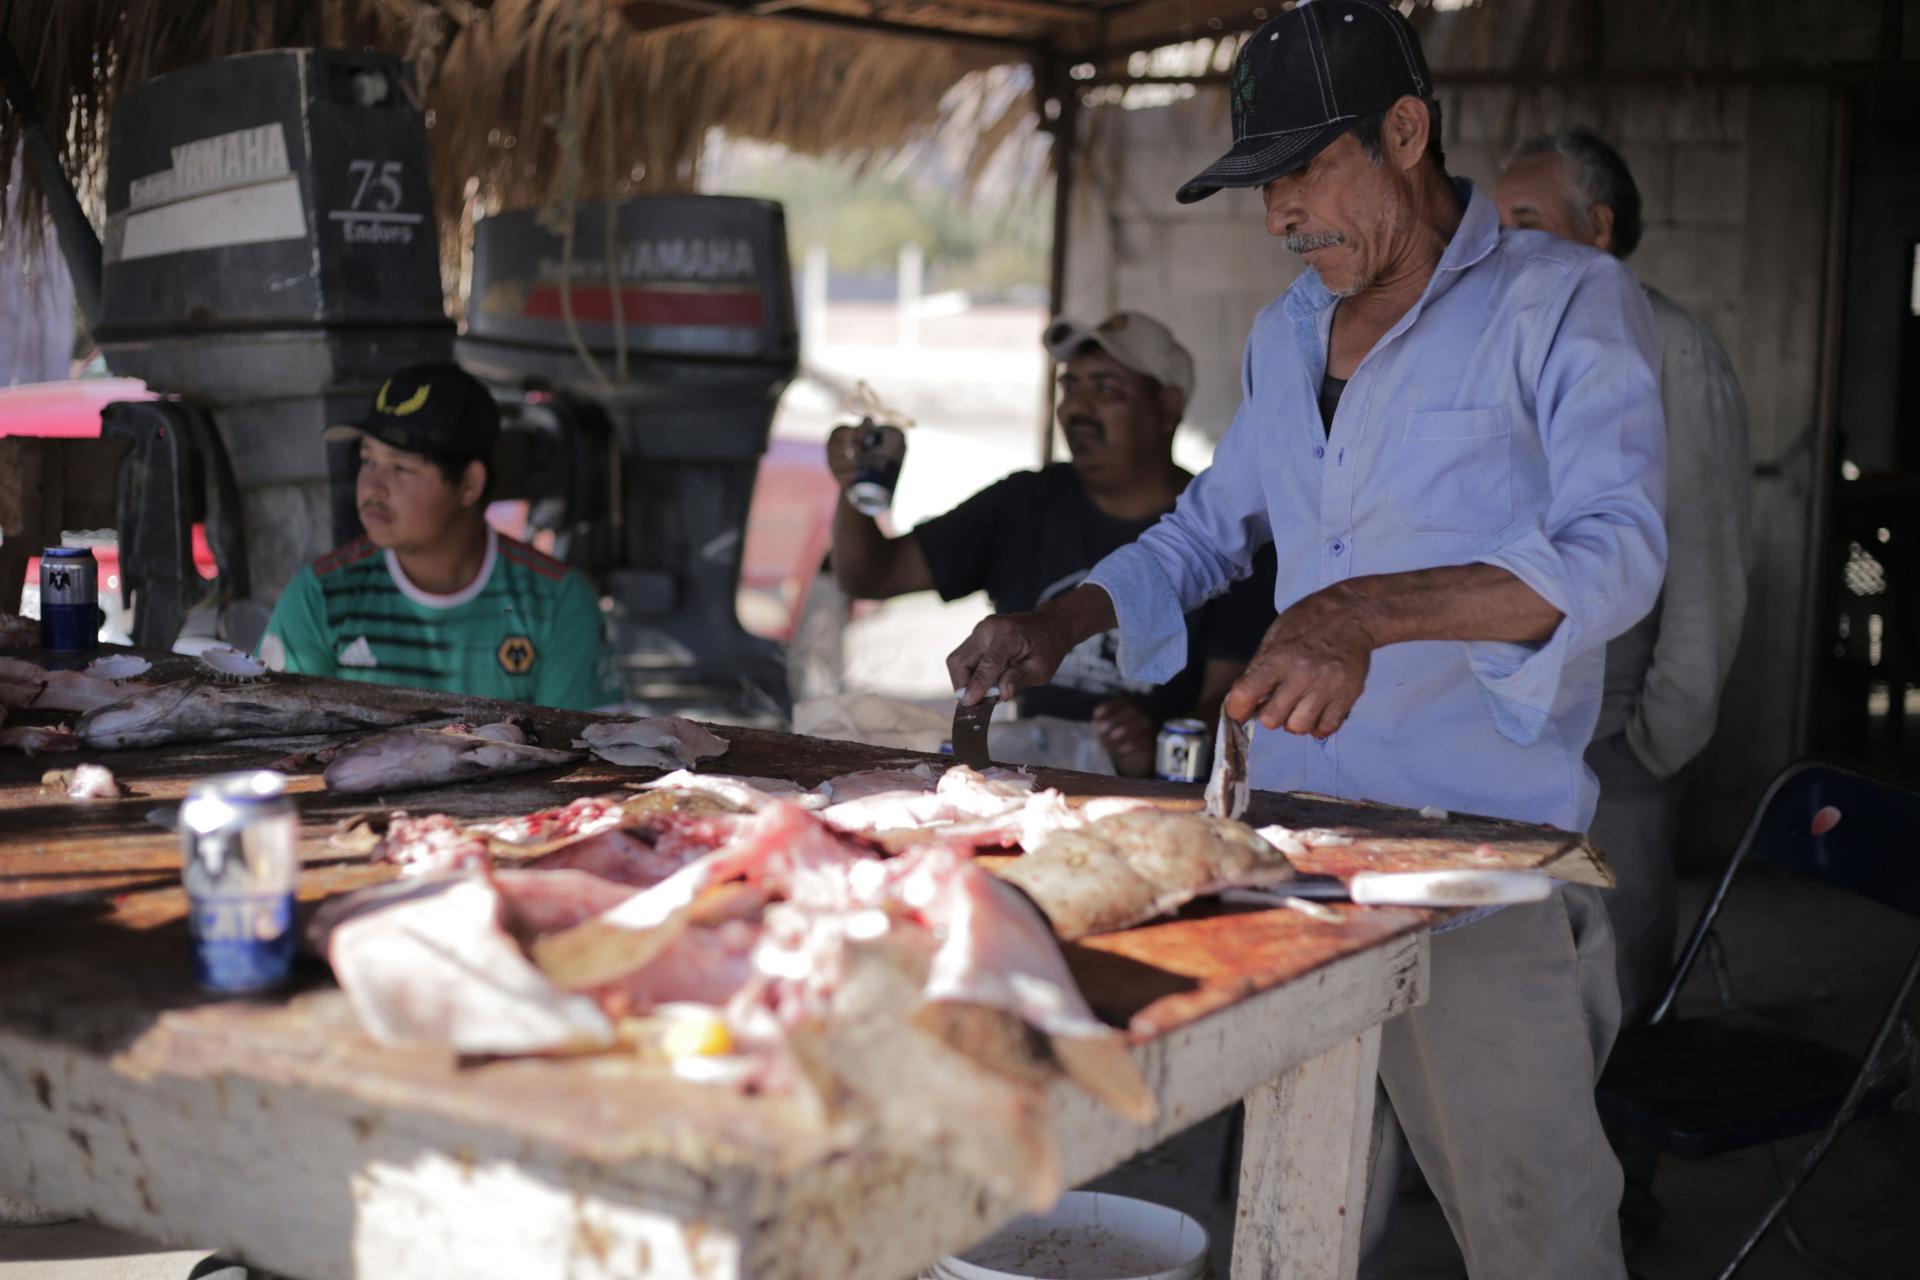 Fisherman Jose Antonio Cruz Espinoza cuts fish in the market. 